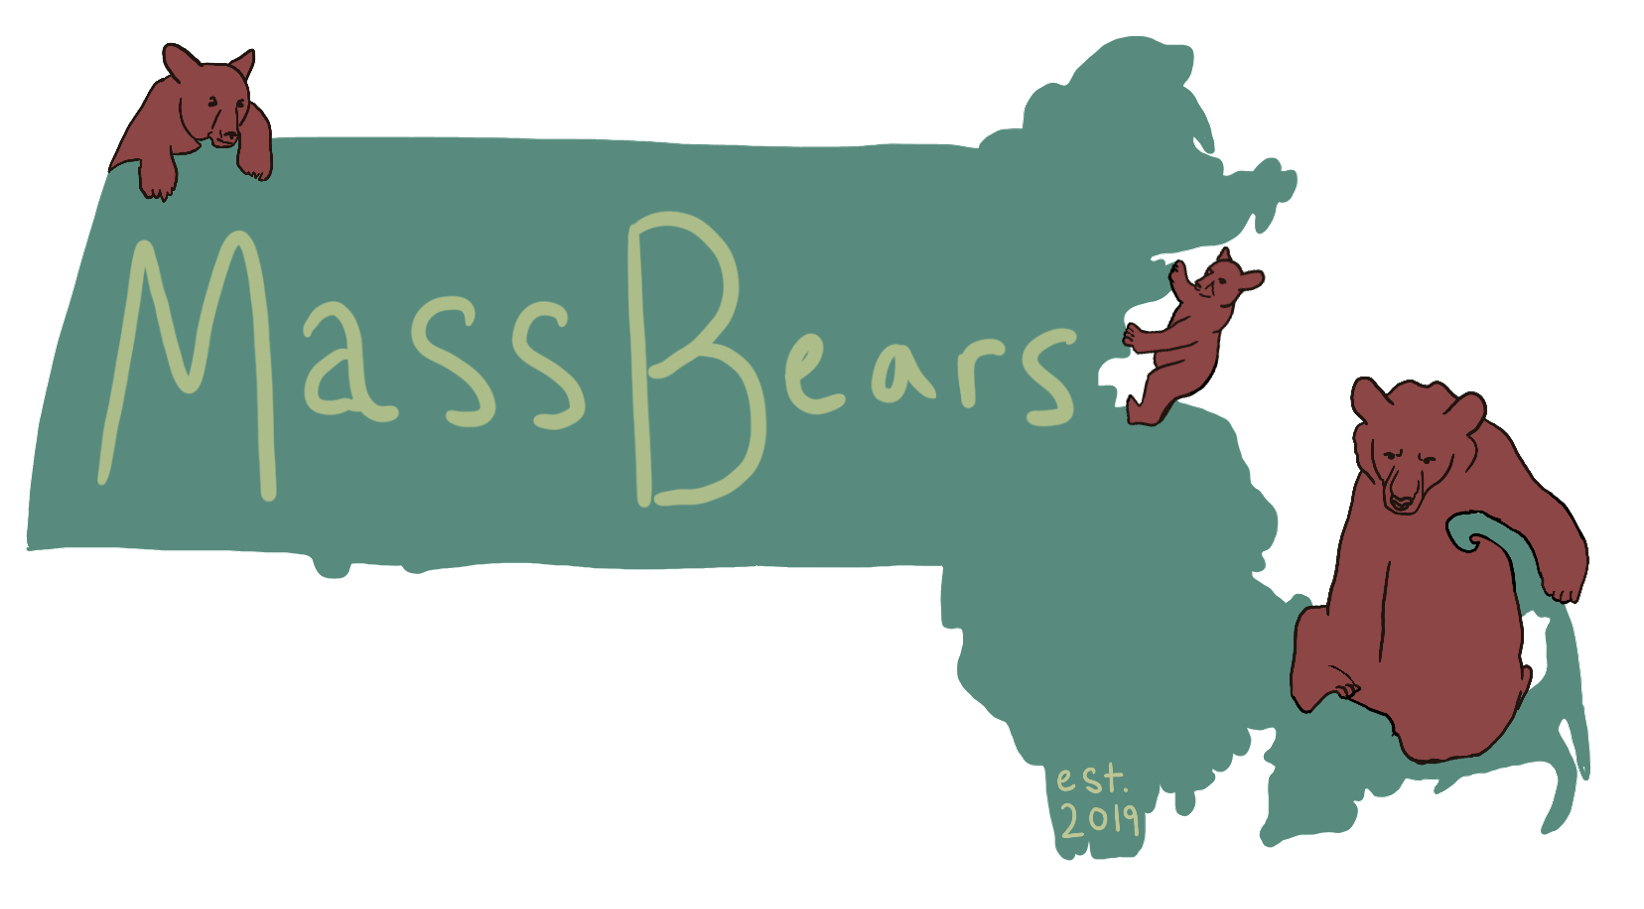 Mass Bears logo showing three bears climbing around on the state of Massachusetts